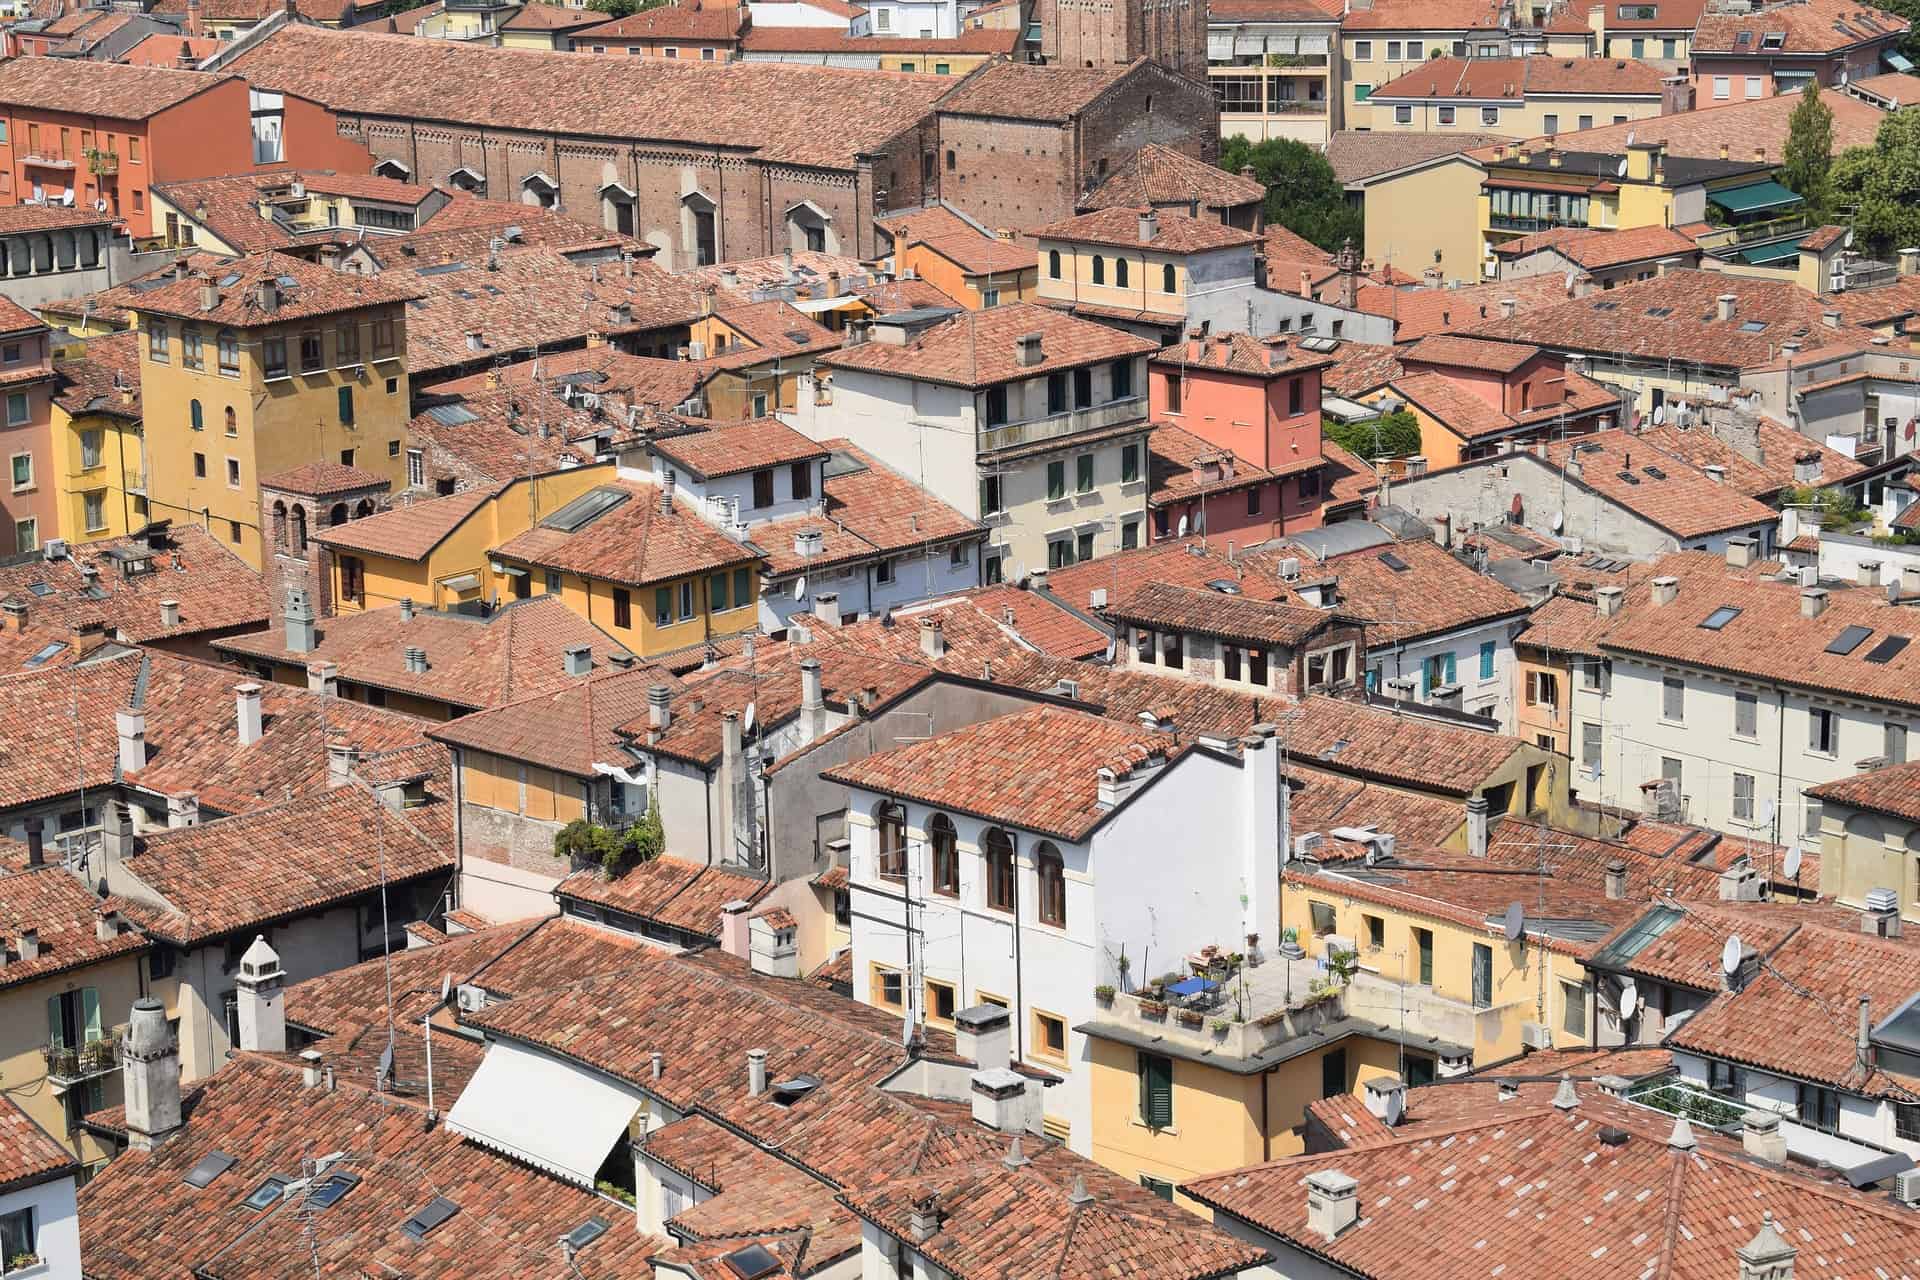 Italy - Verona - Terracotta rooftops and hidden gems in Italy